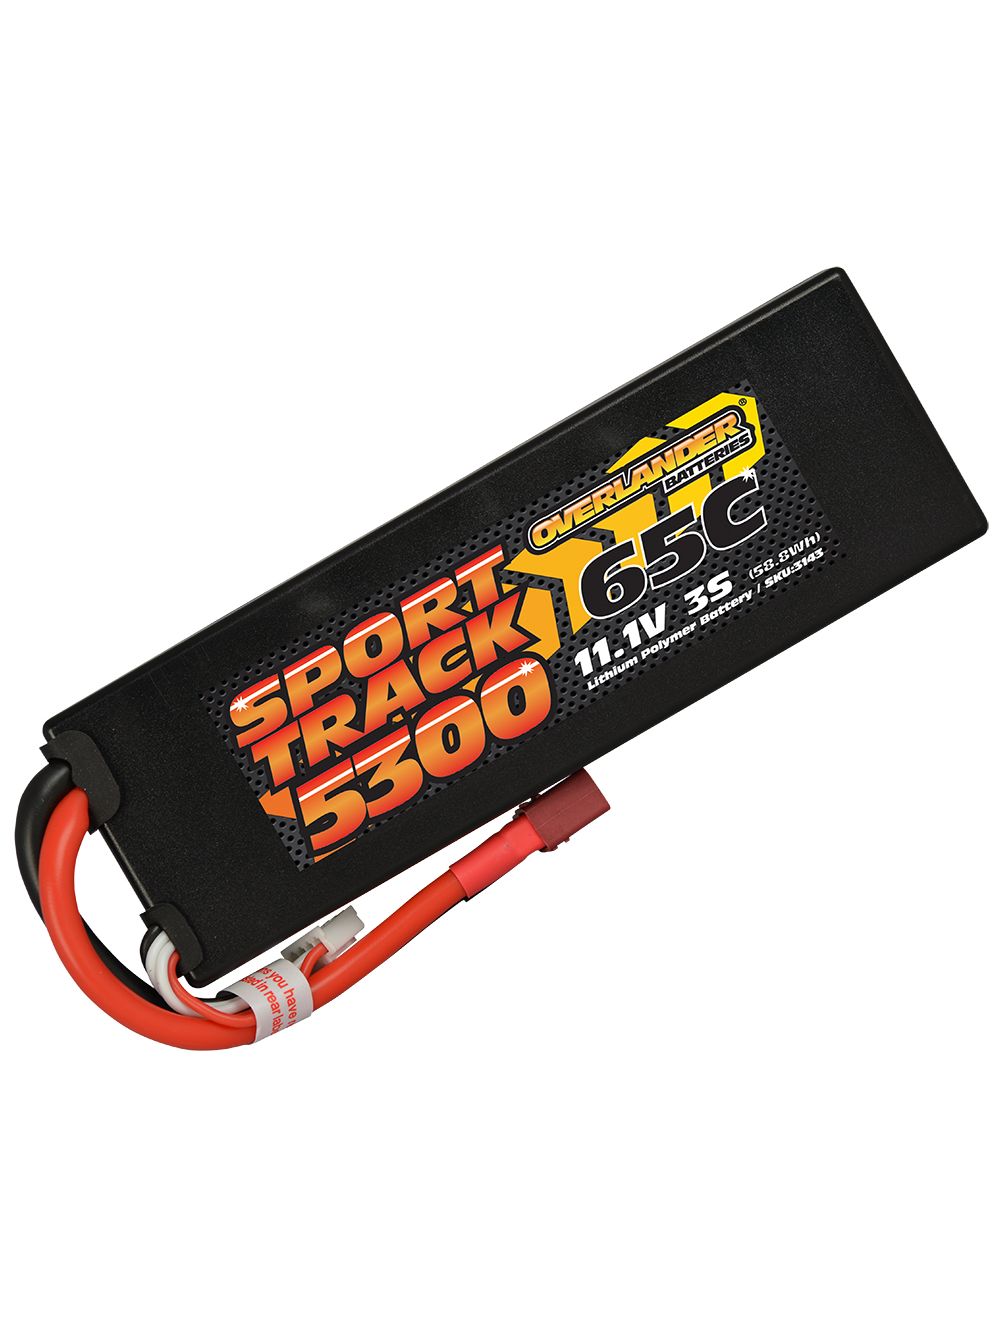 Overlander 5300mAh 11.1V 3S 65C Hard Case Sport Track LiPo Battery - XT90 Connector 3143